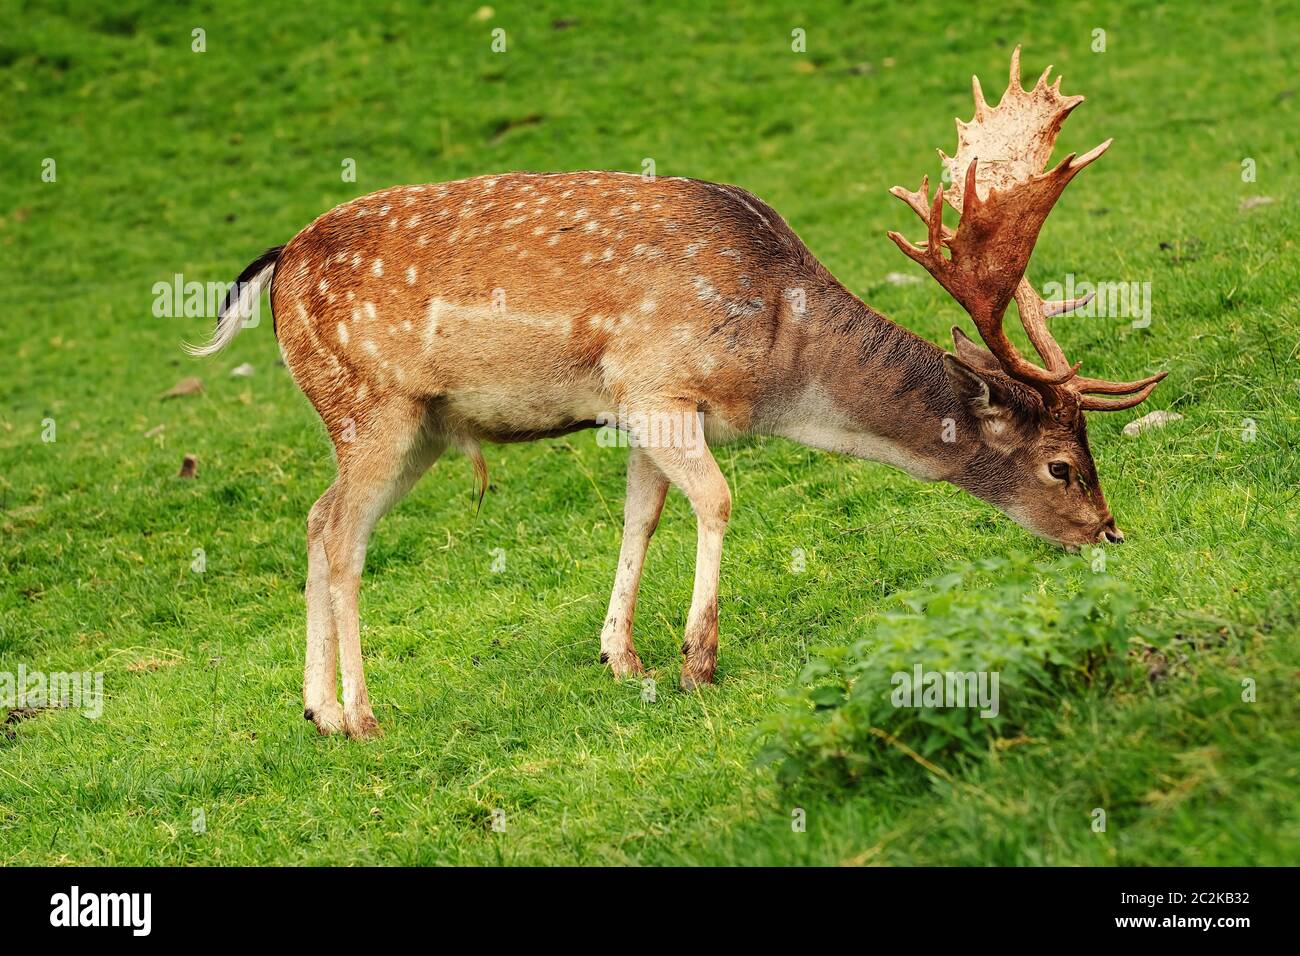 Deer Grazing on the Grass Stock Photo